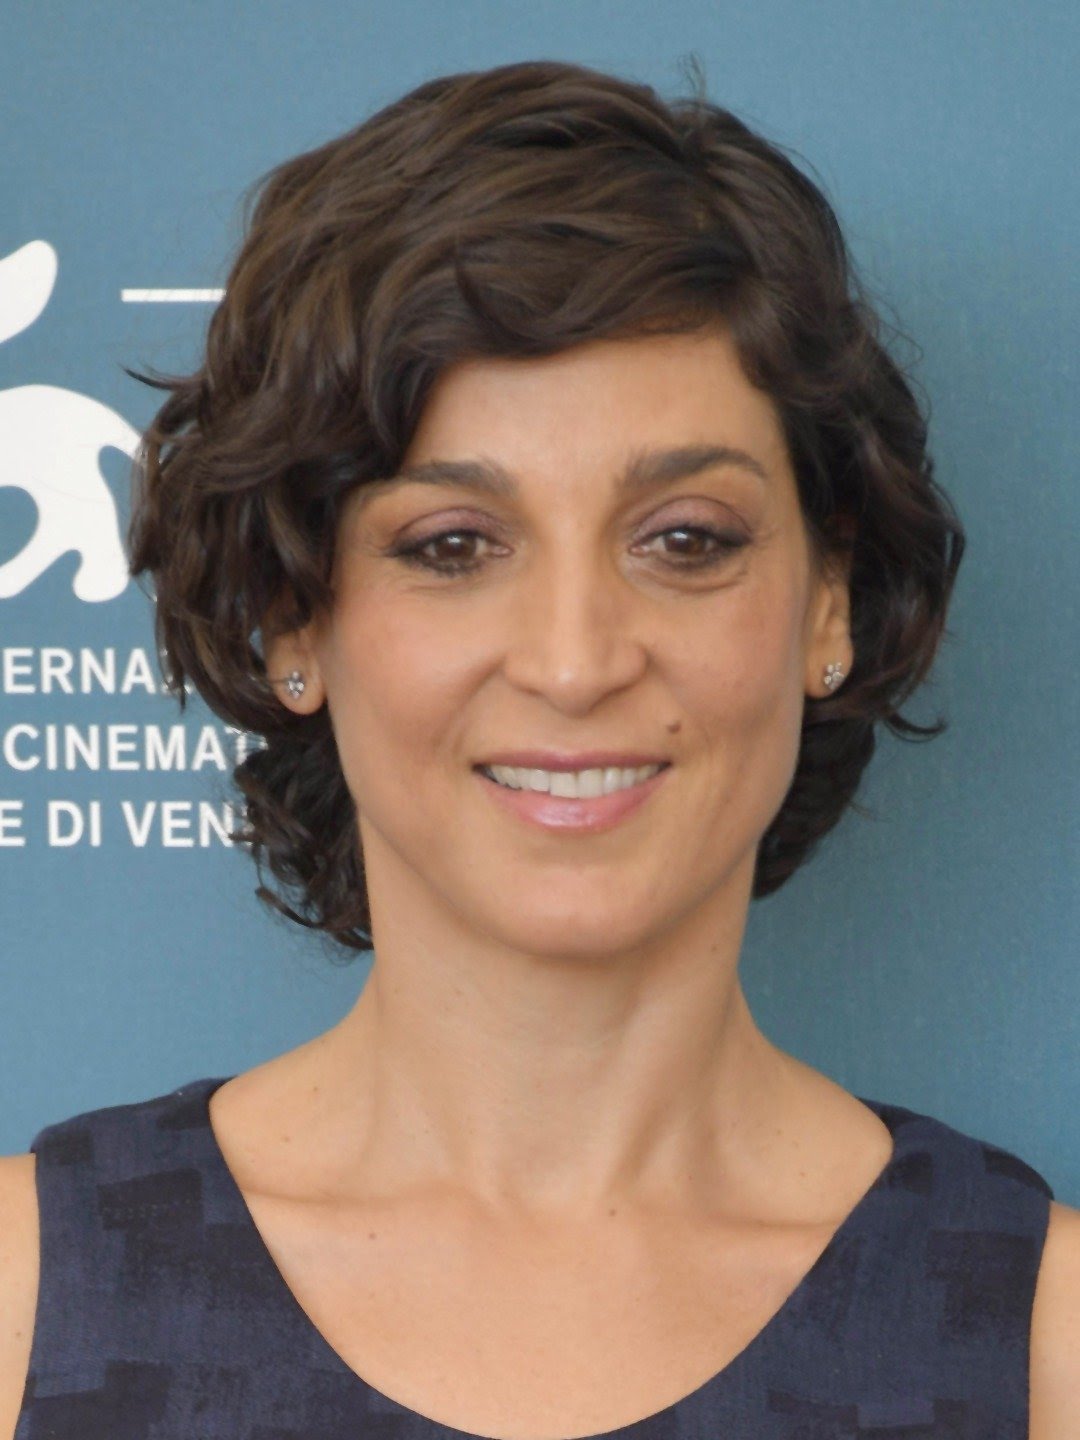 Donatella Finocchiaro Italian Actress, Writer, Director